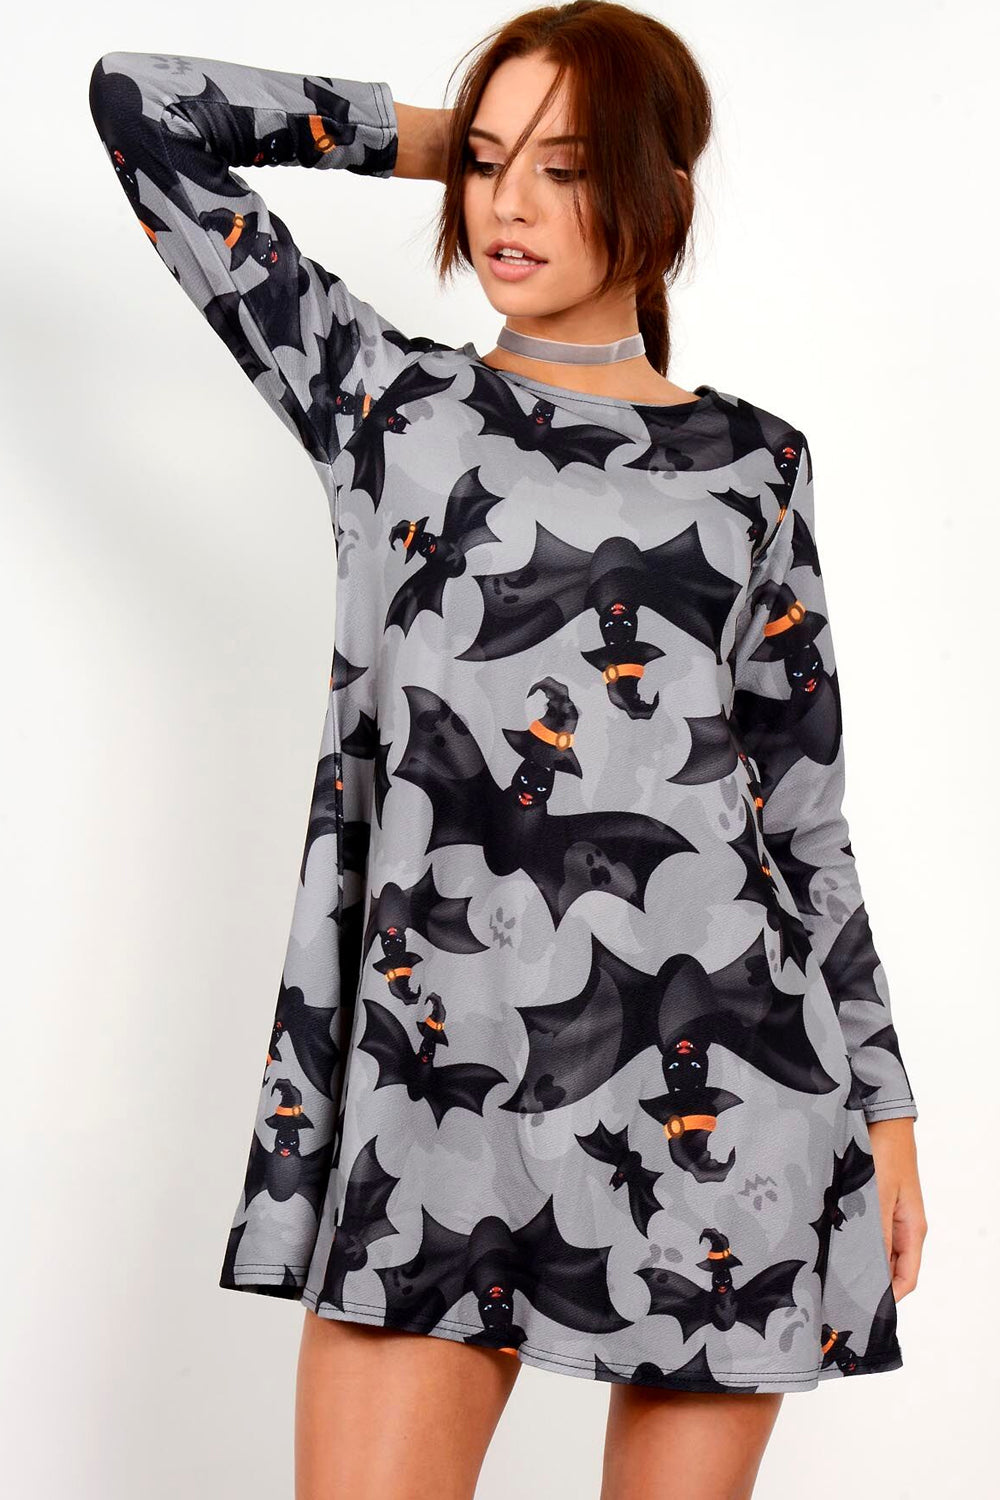 Long Sleeve Grey Halloween Print Dress - bejealous-com